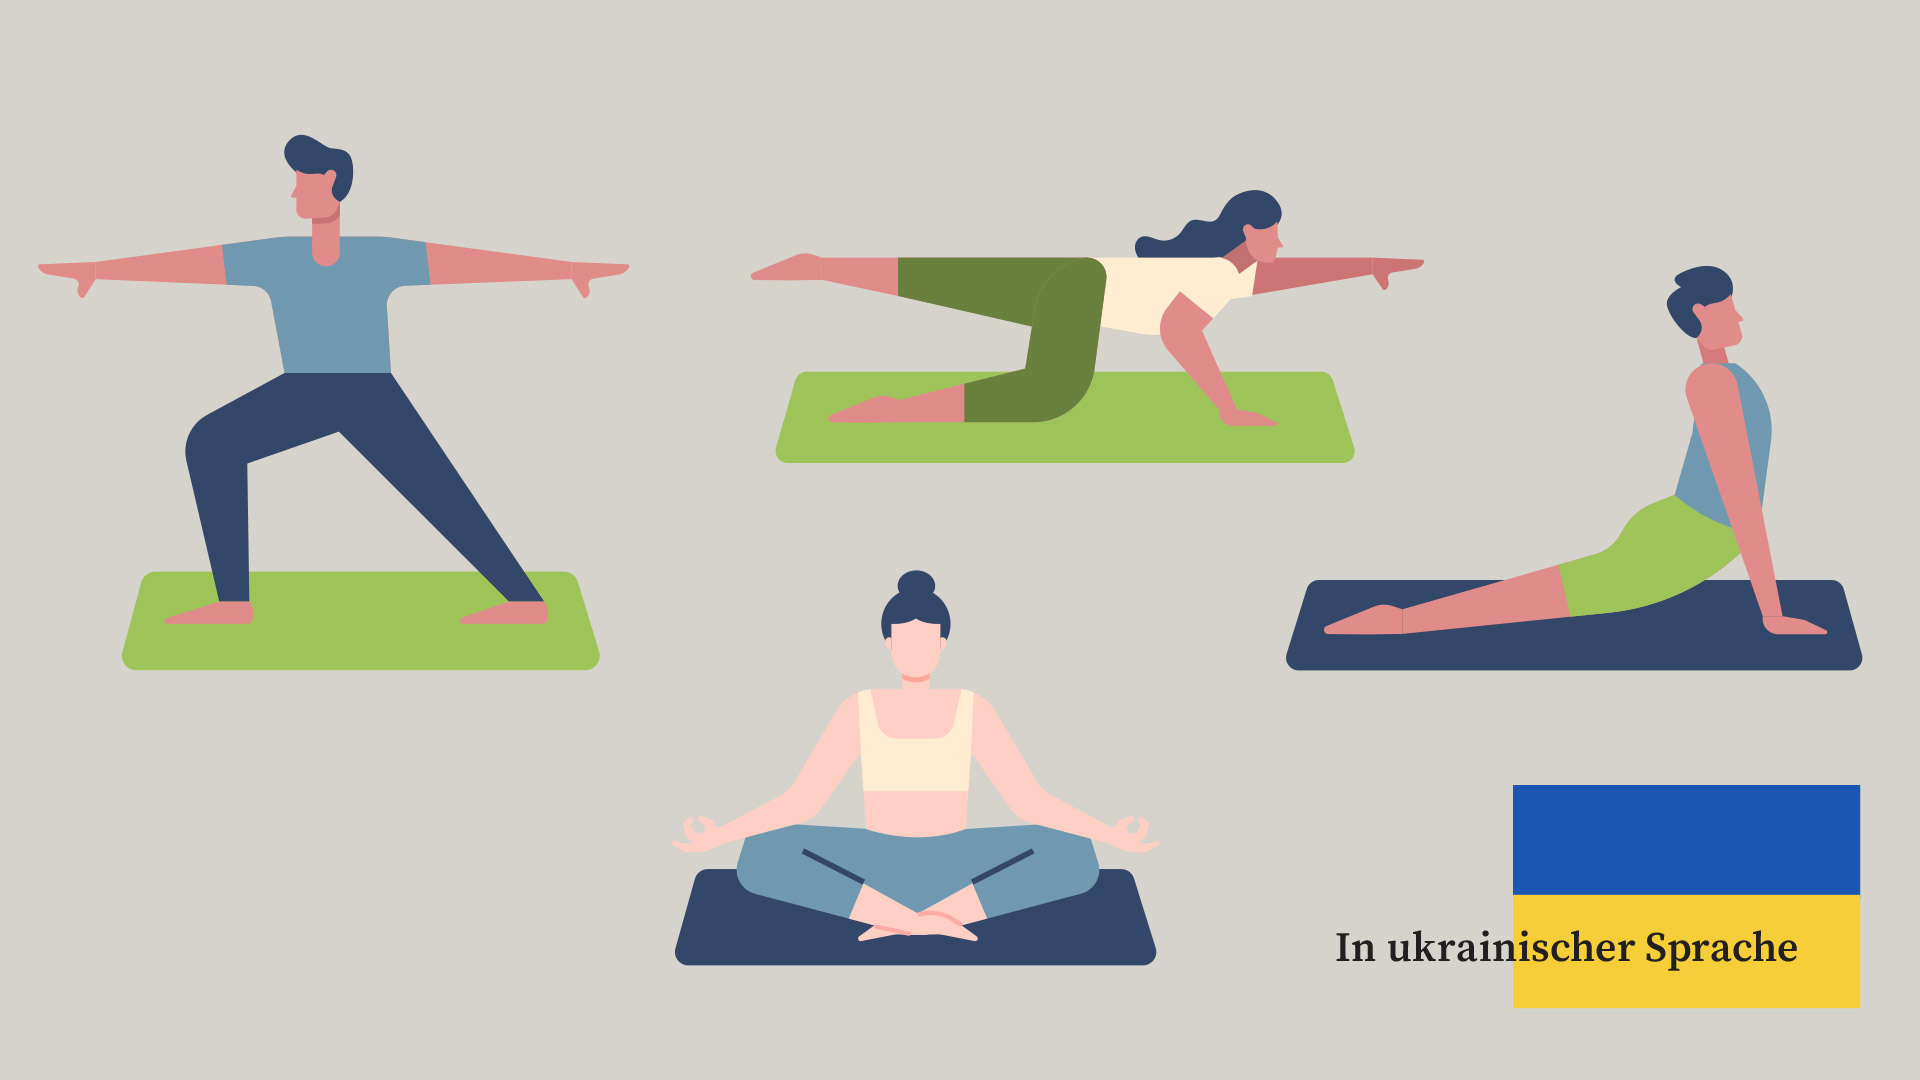 Yoga in ukrainischer Sprache